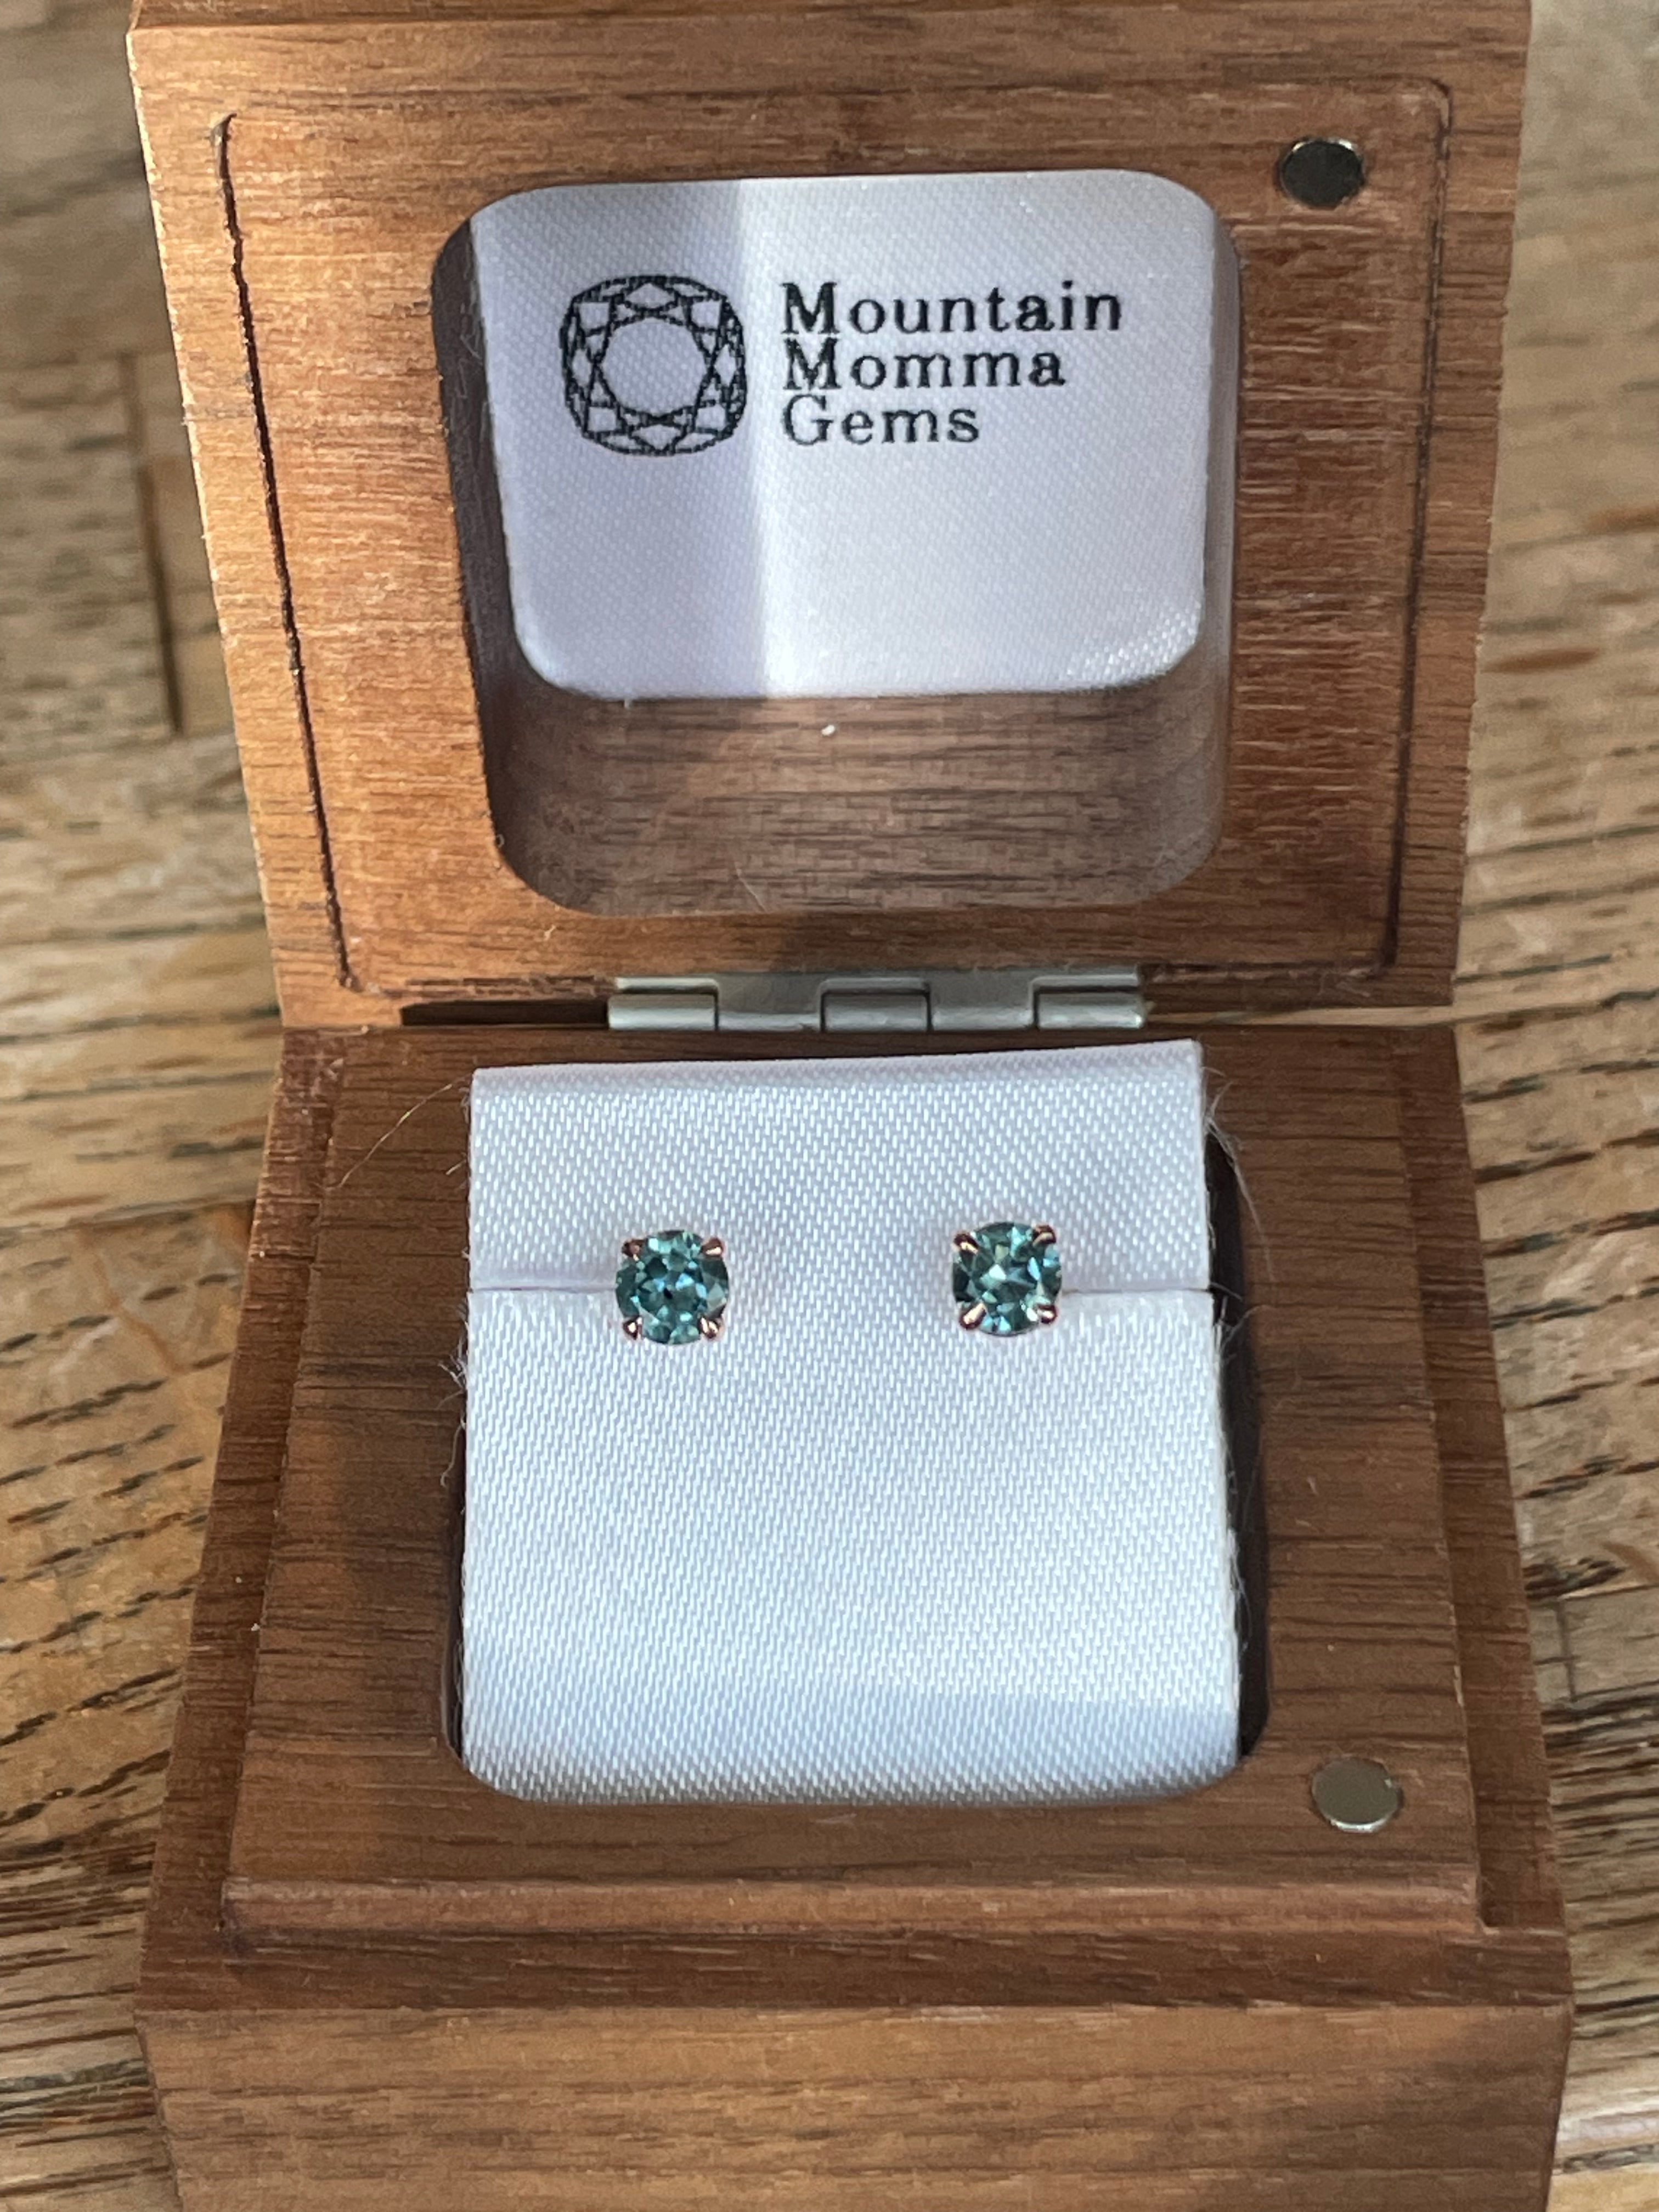 Montana Sapphire Stud Earrings Teal Aqua .62 ctw 14 KR